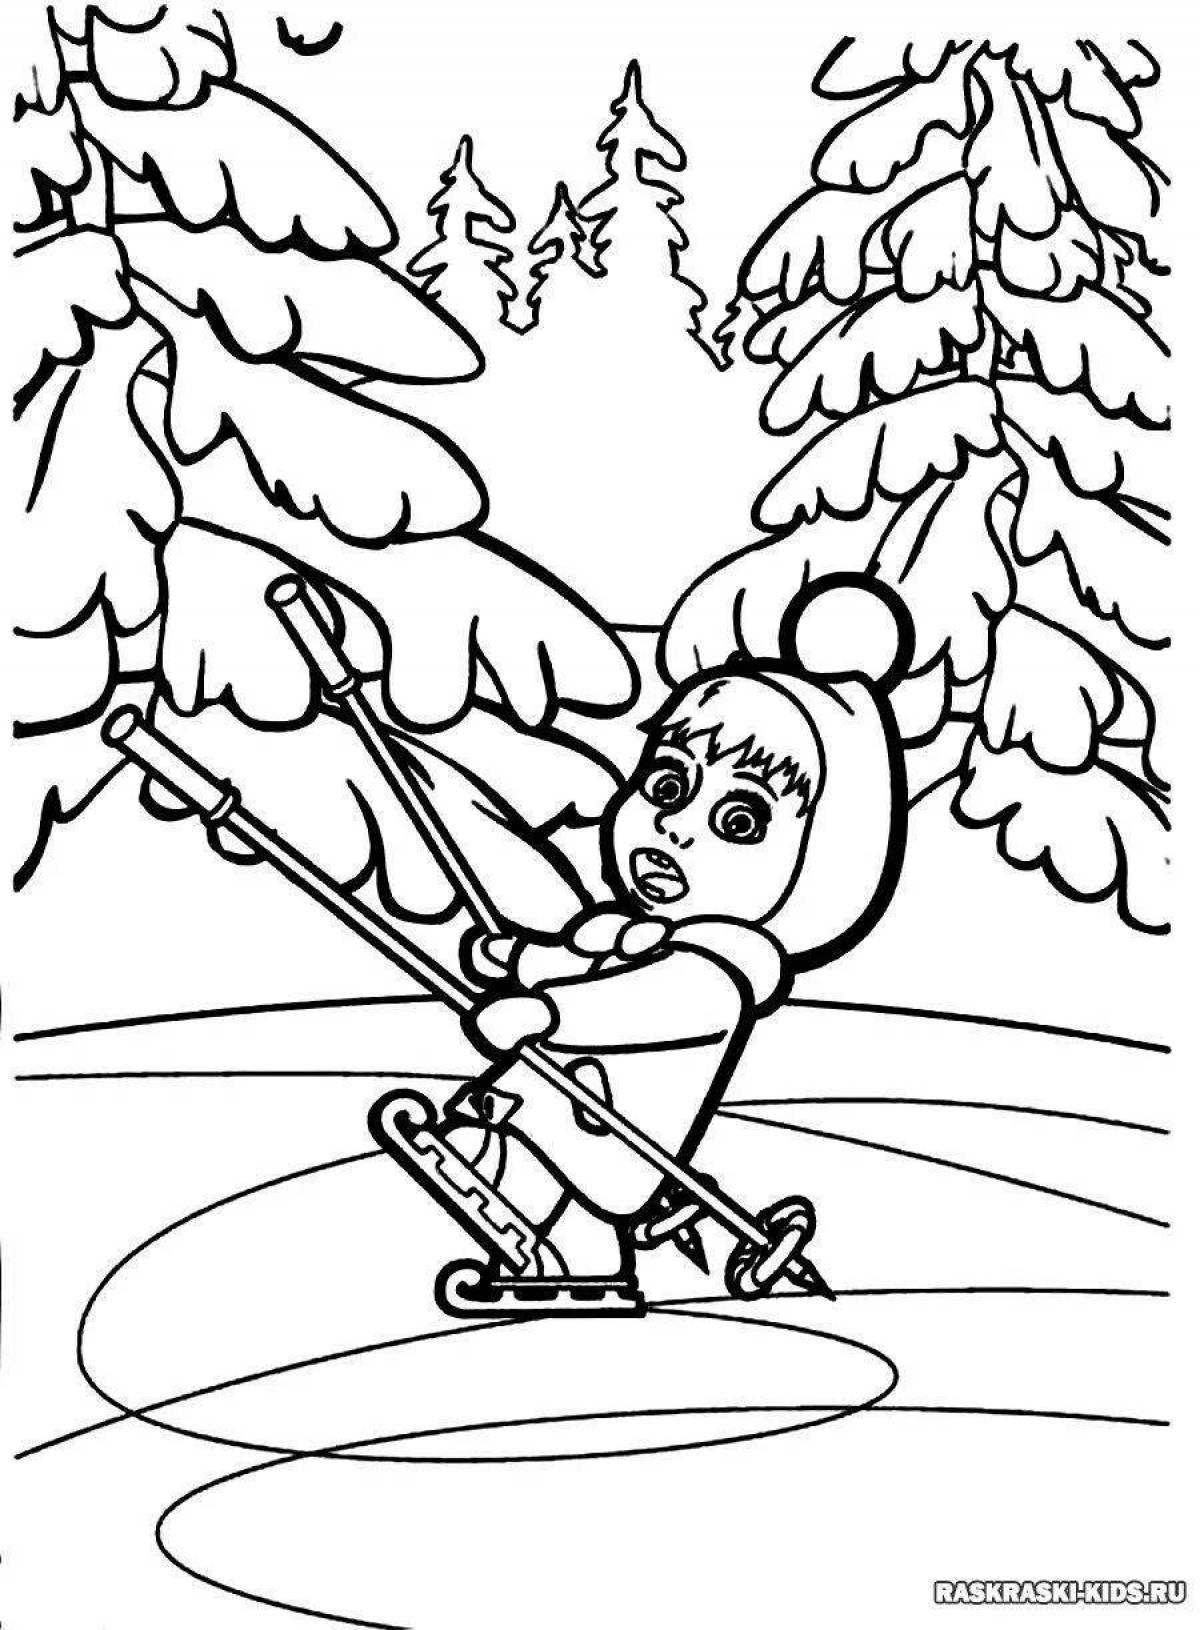 Fun coloring book winter cartoons